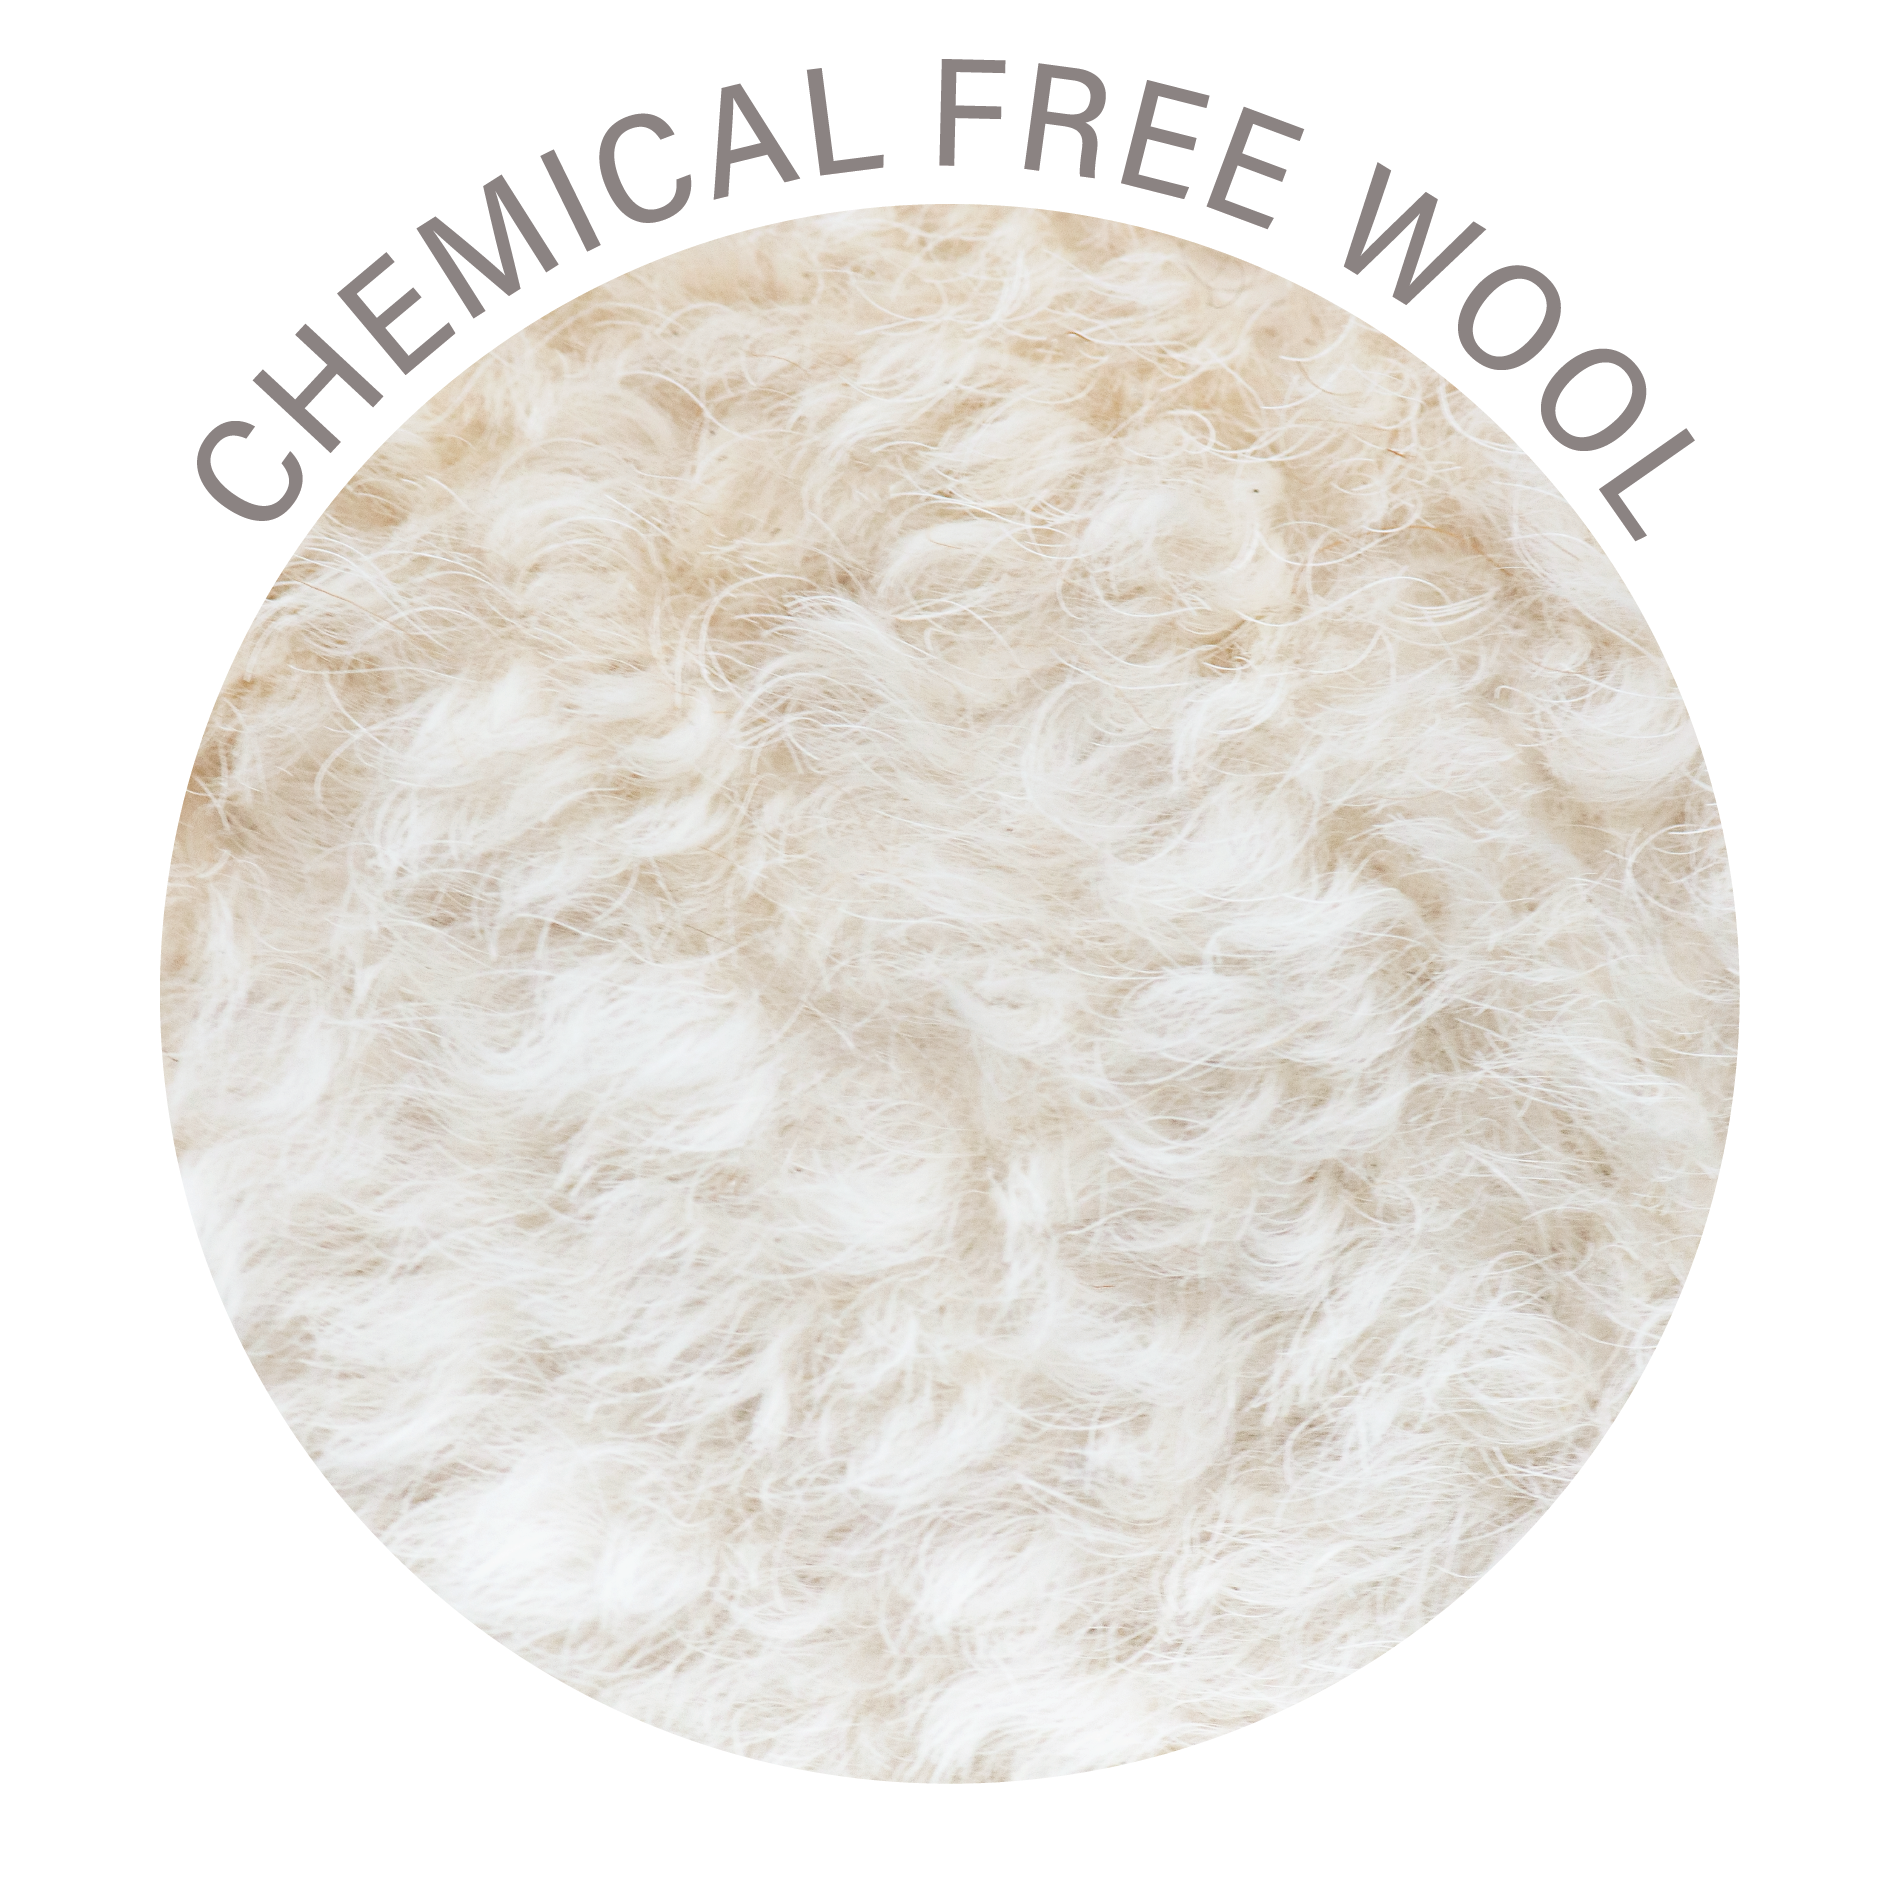 Chemical free wool